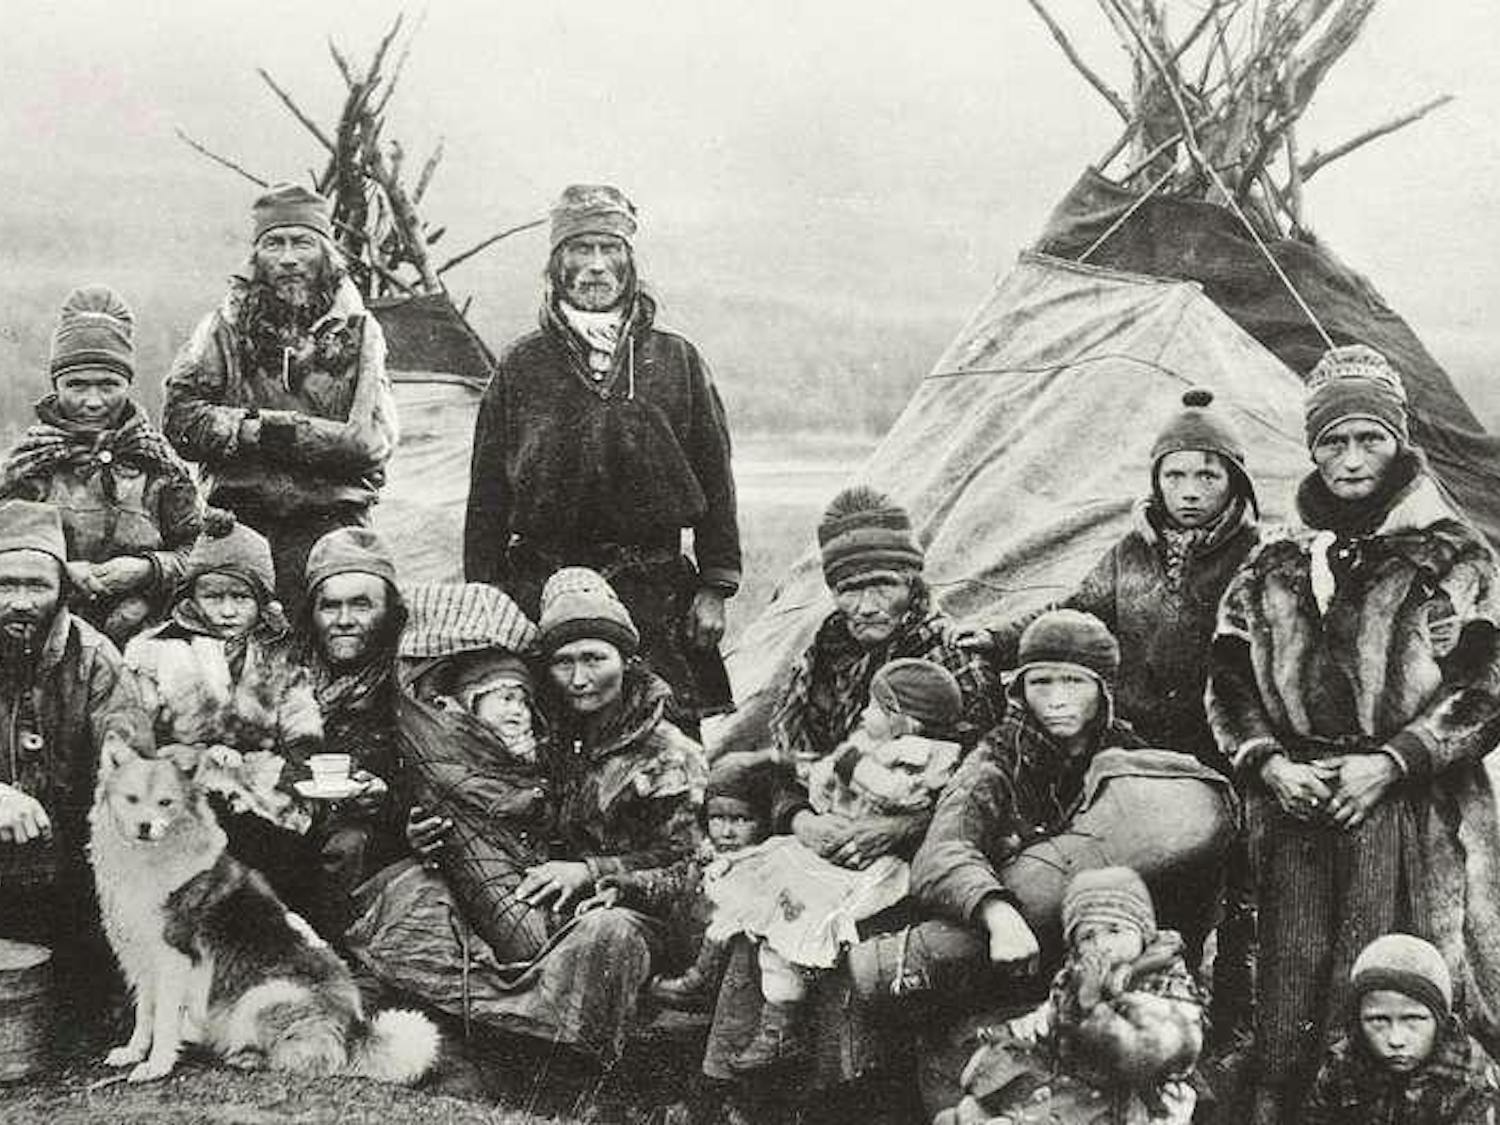 nordic-sami-people-lavvu-1900-1920-4fb887-1024.jpg